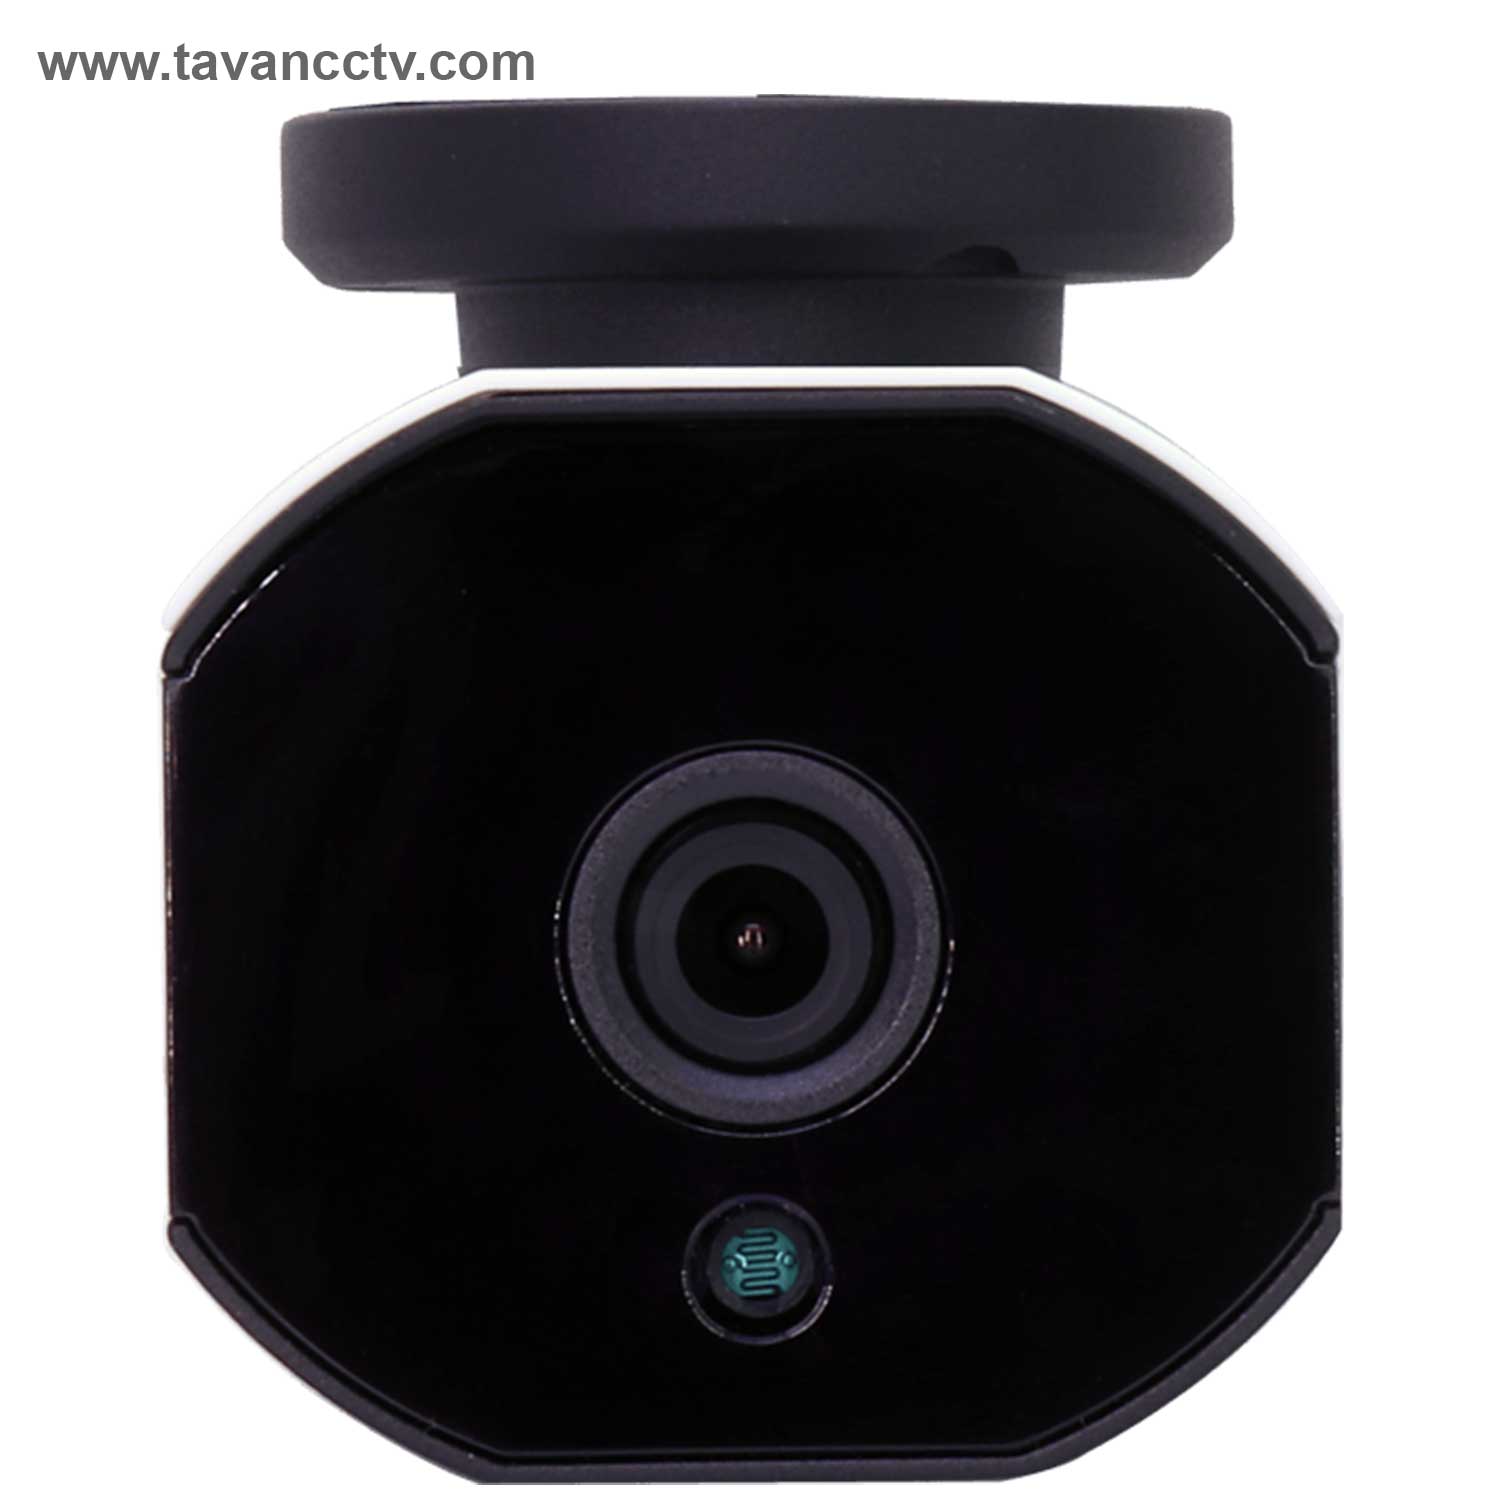 دوربین مداربسته وی مکس Vmax مدل VM-250BL